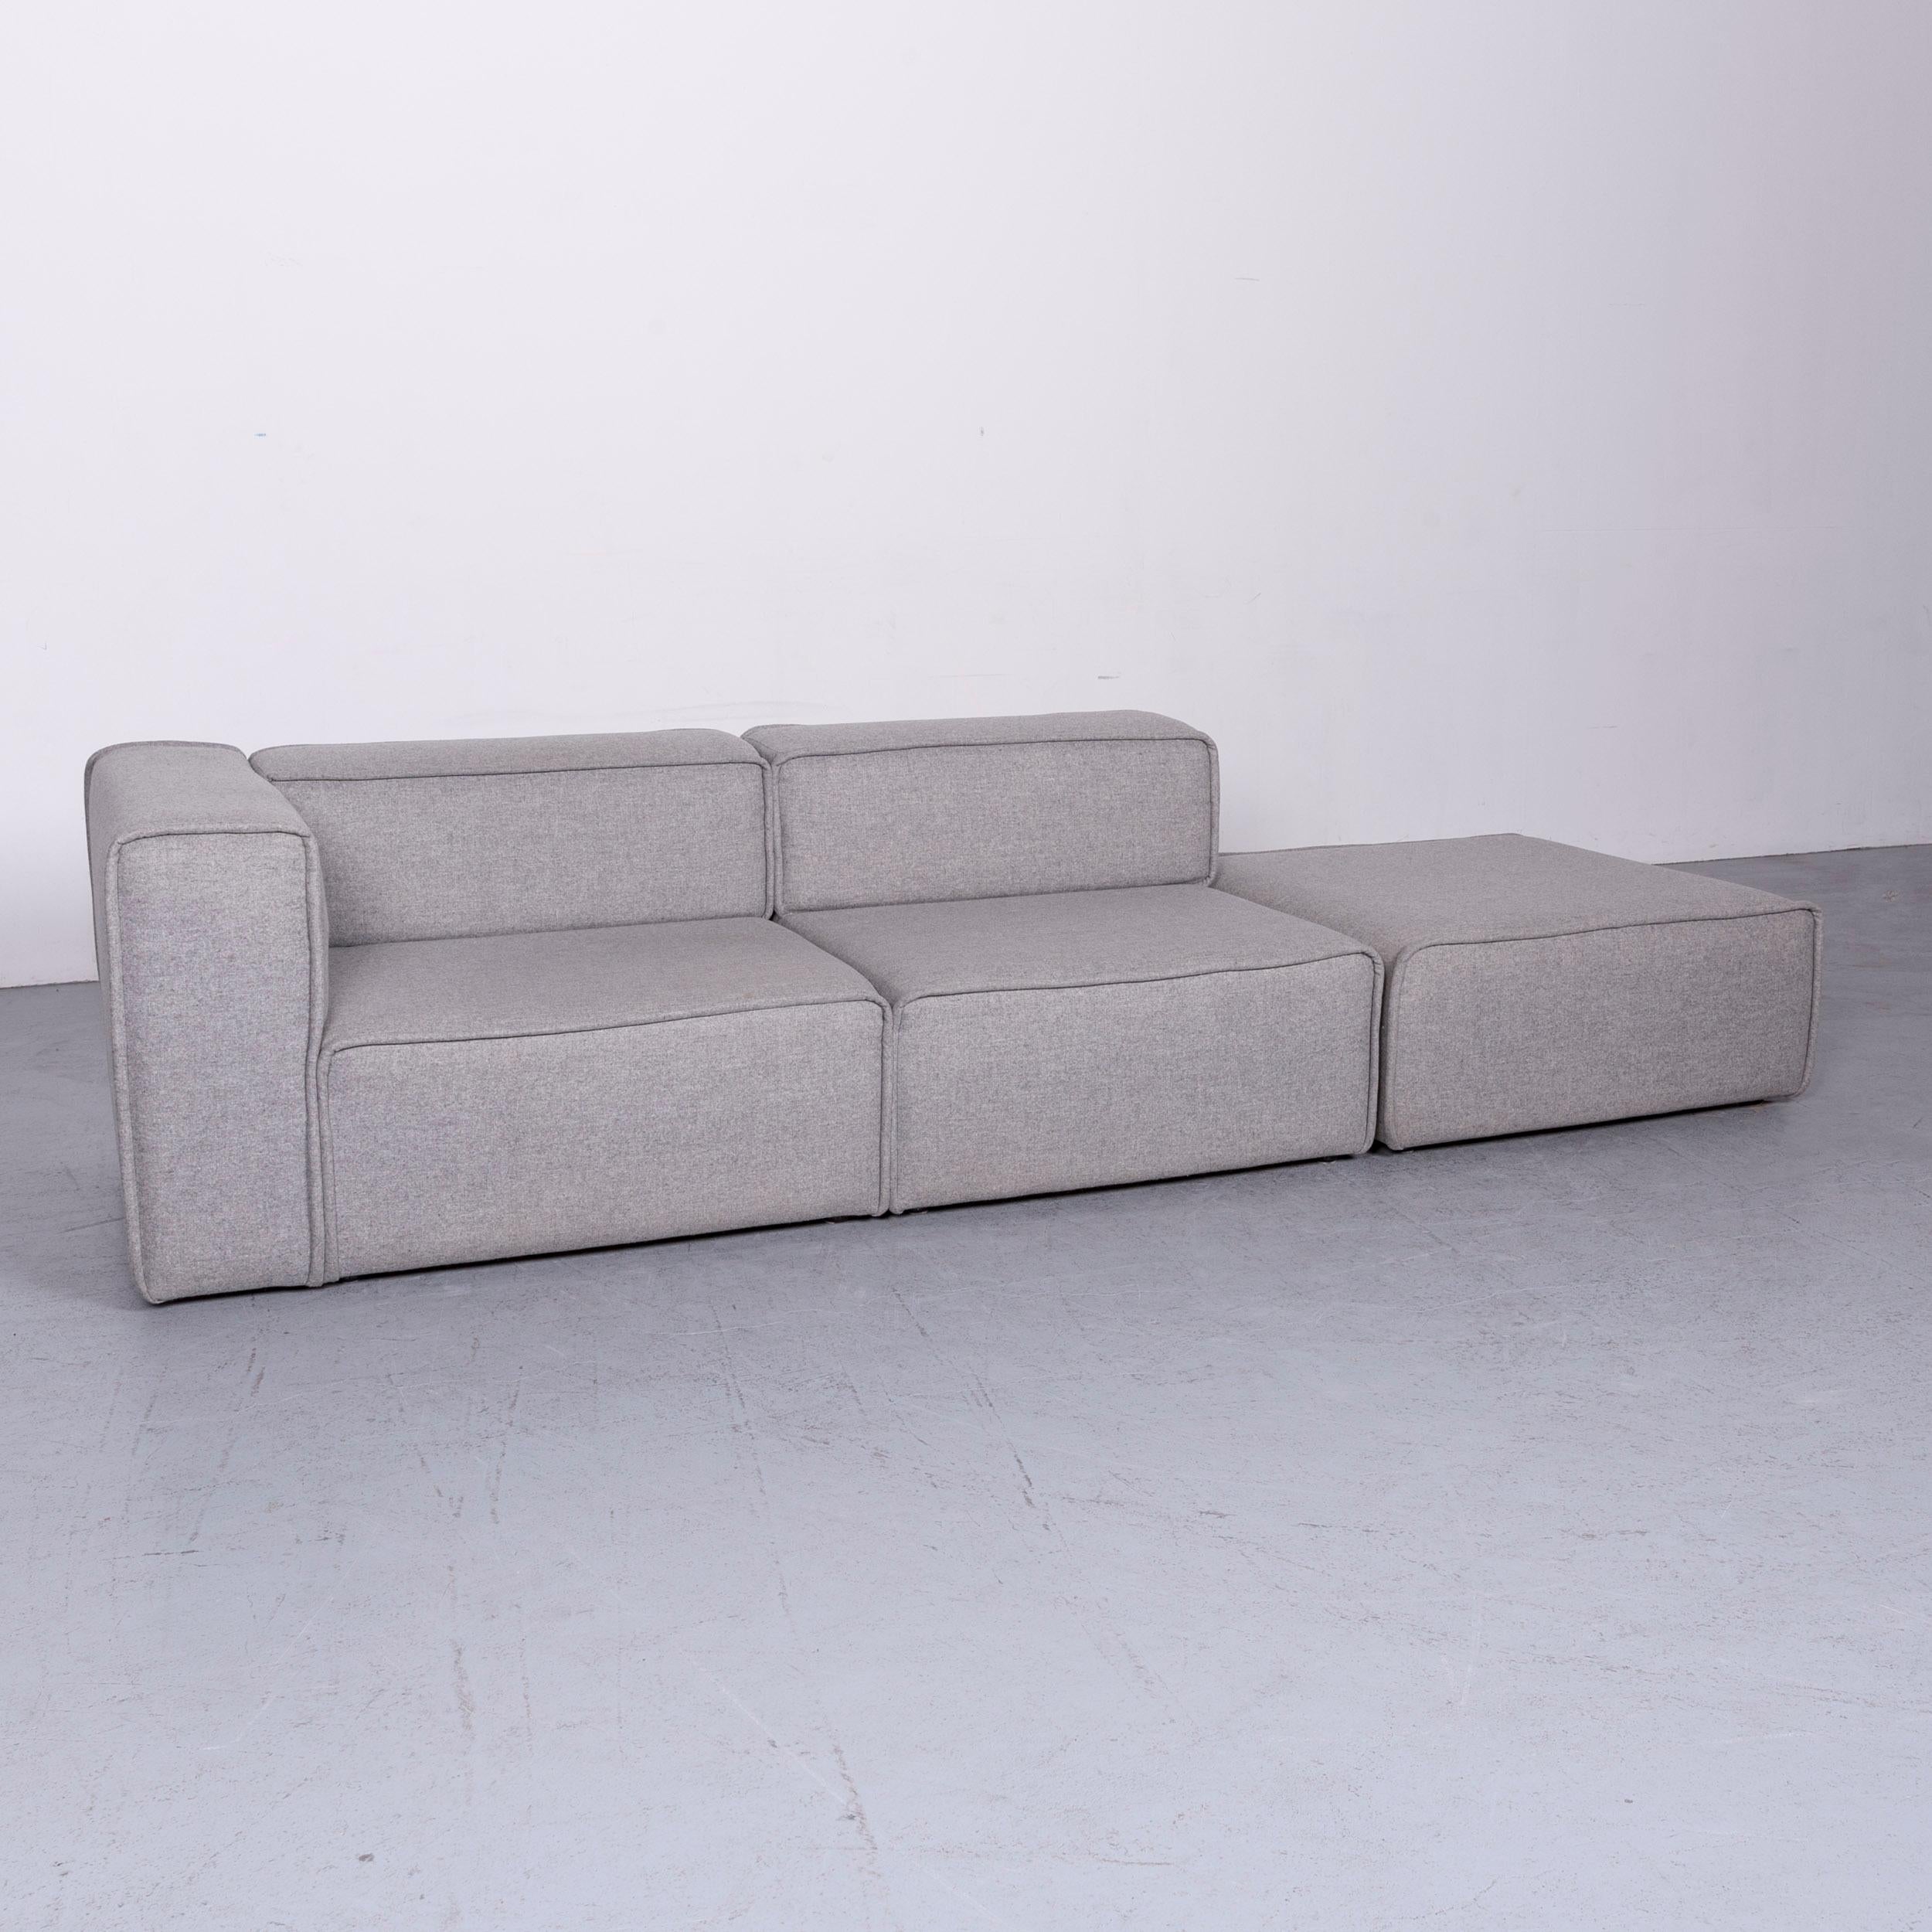 We bring to you a BoConcept carmo designer sofa grey grey three-seat couch.